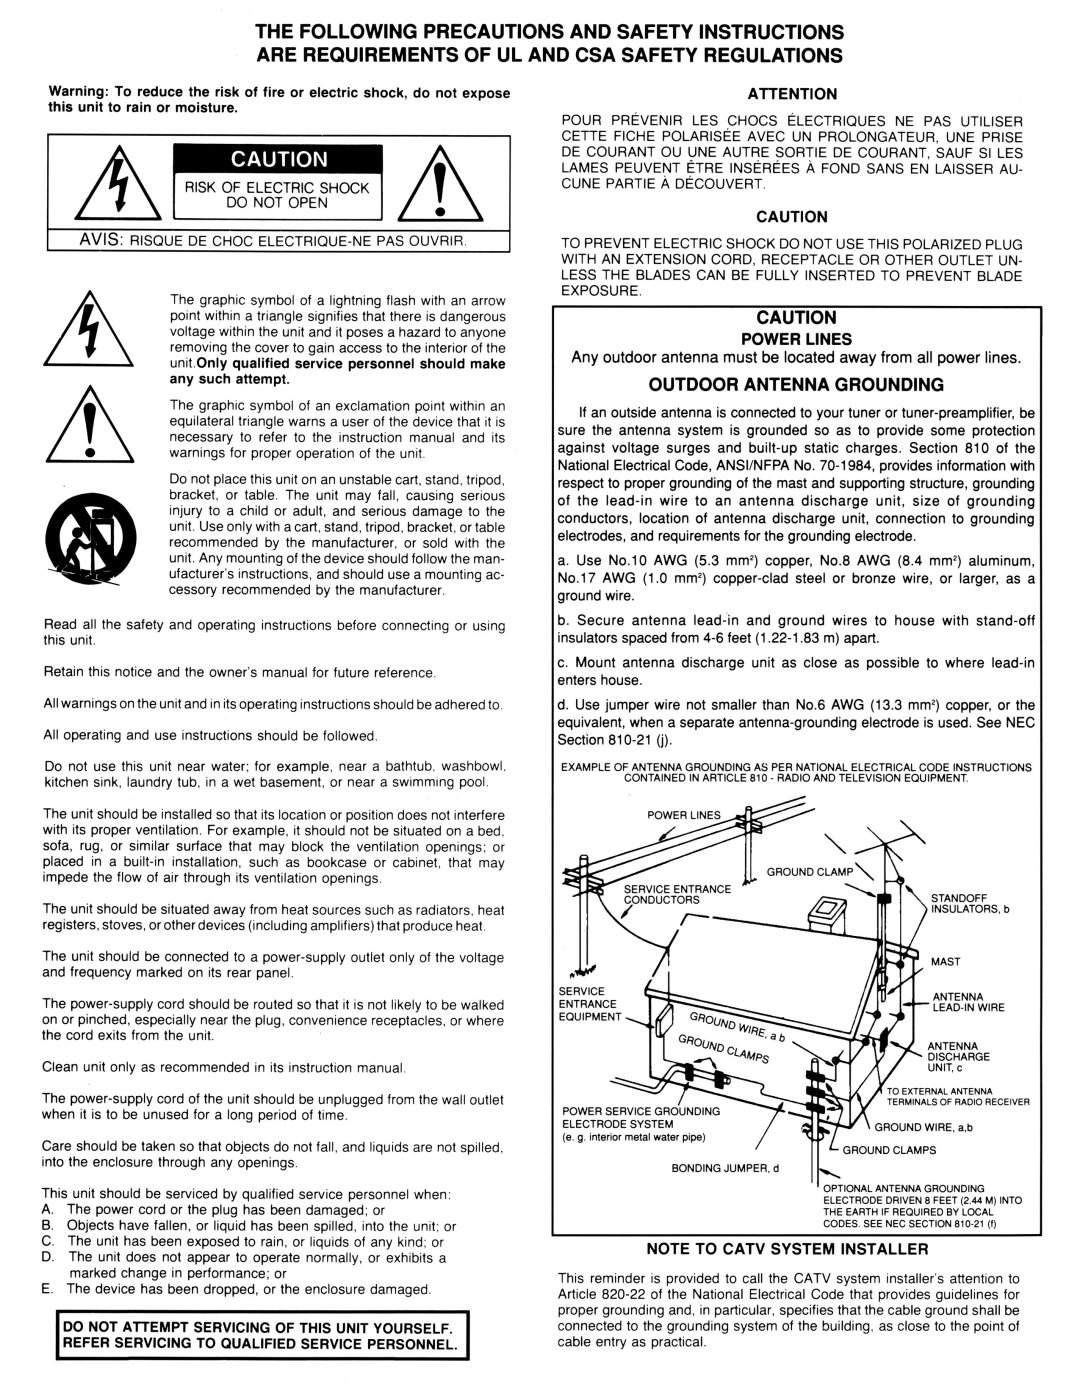 Adcom 7705, GFA7707 manual 